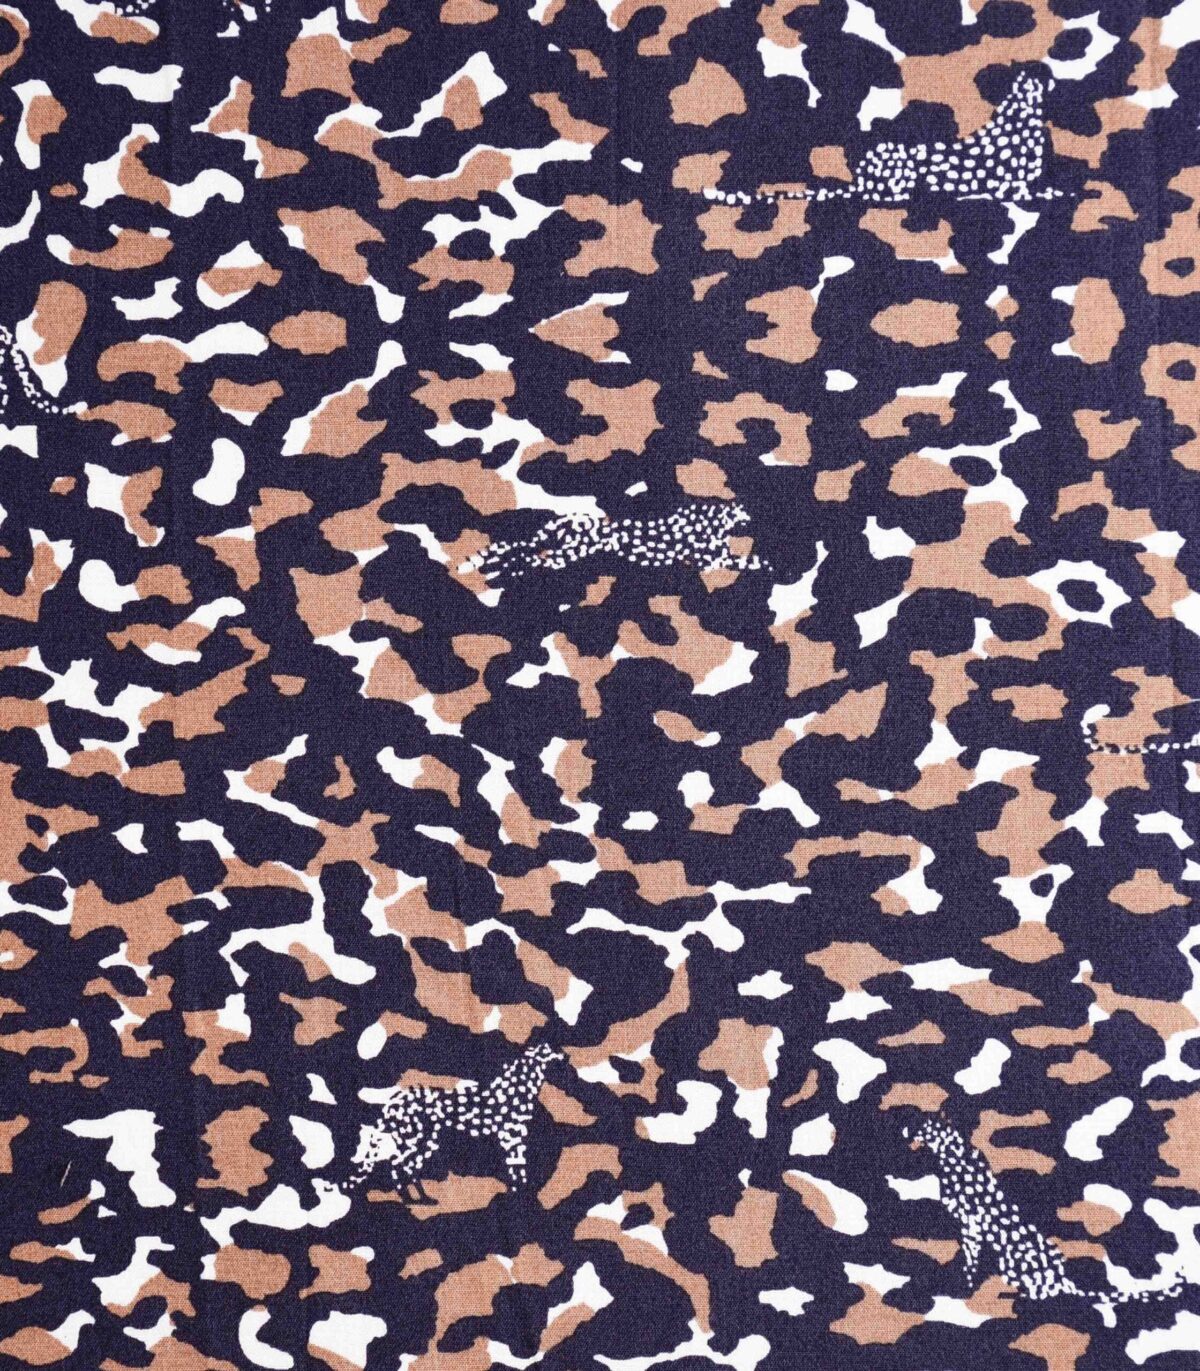 Cotton Cheetahs Animal Print Fabric